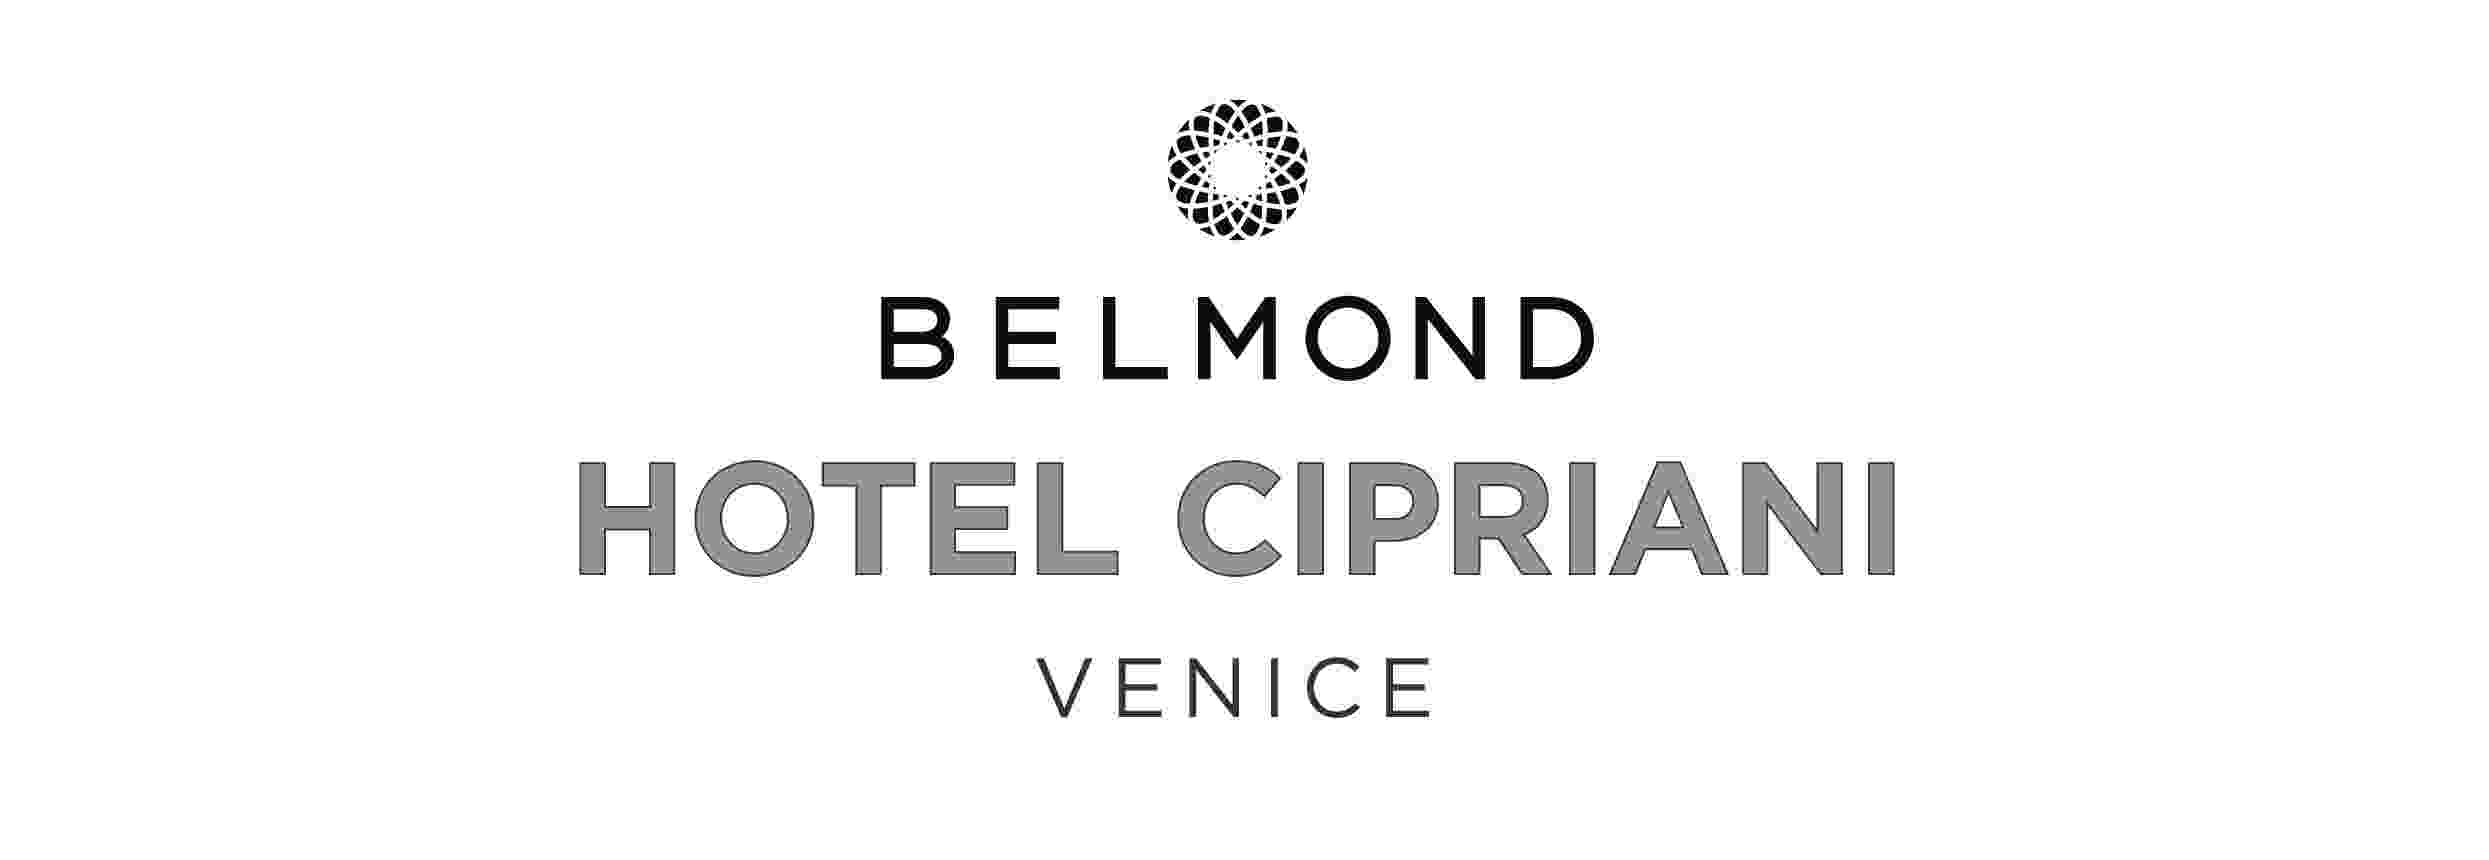 Belmond (UK) Limited